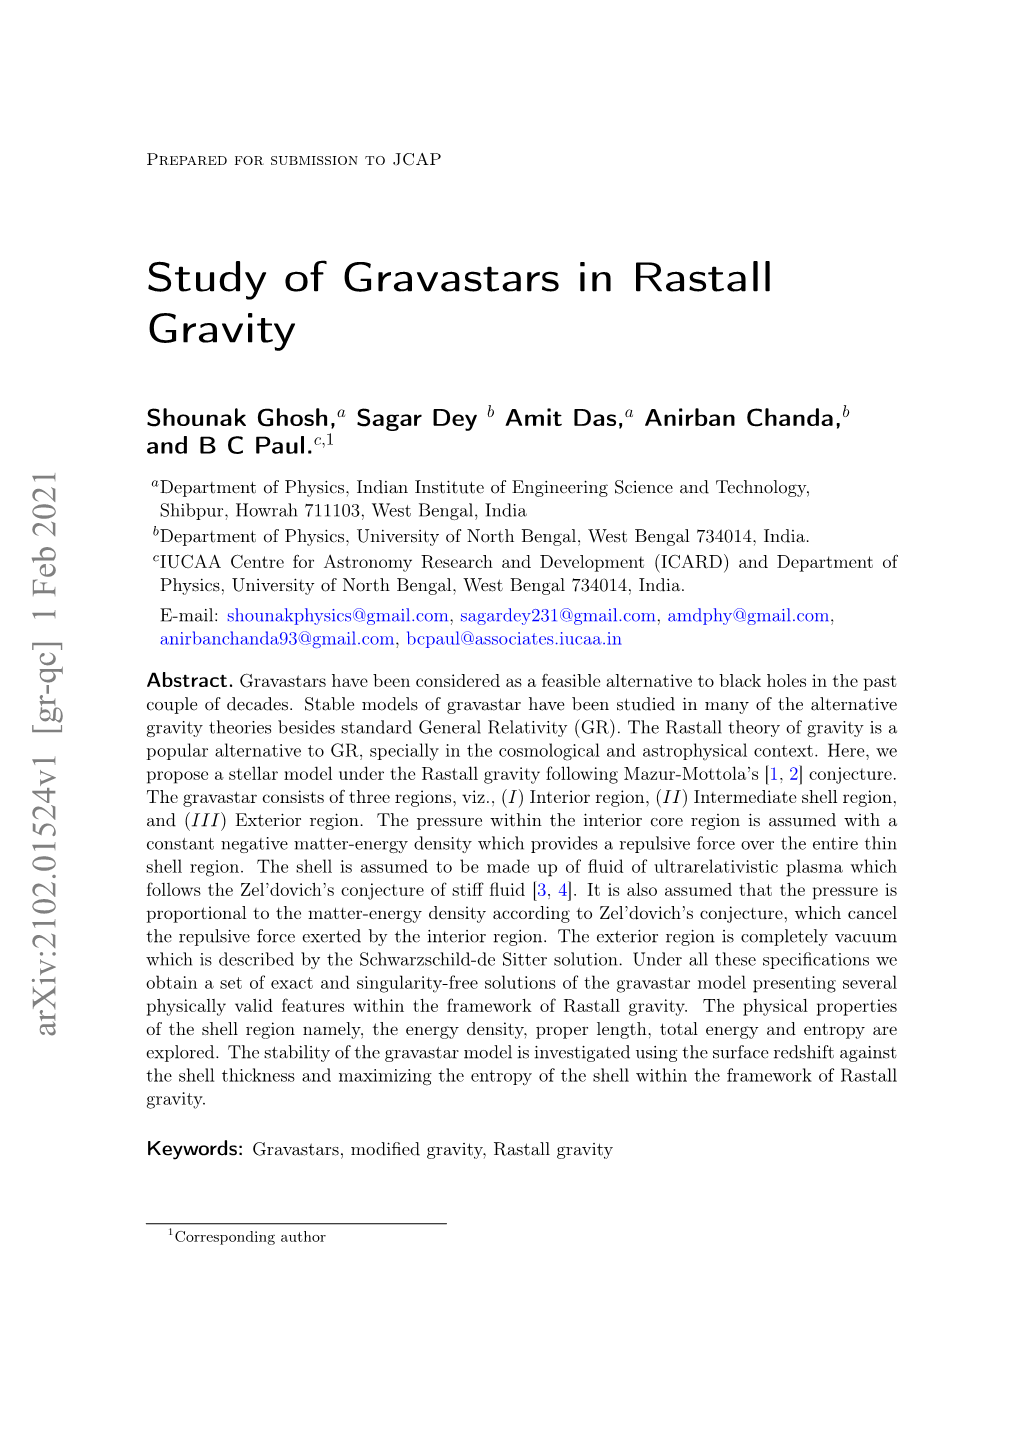 Study of Gravastars in Rastall Gravity